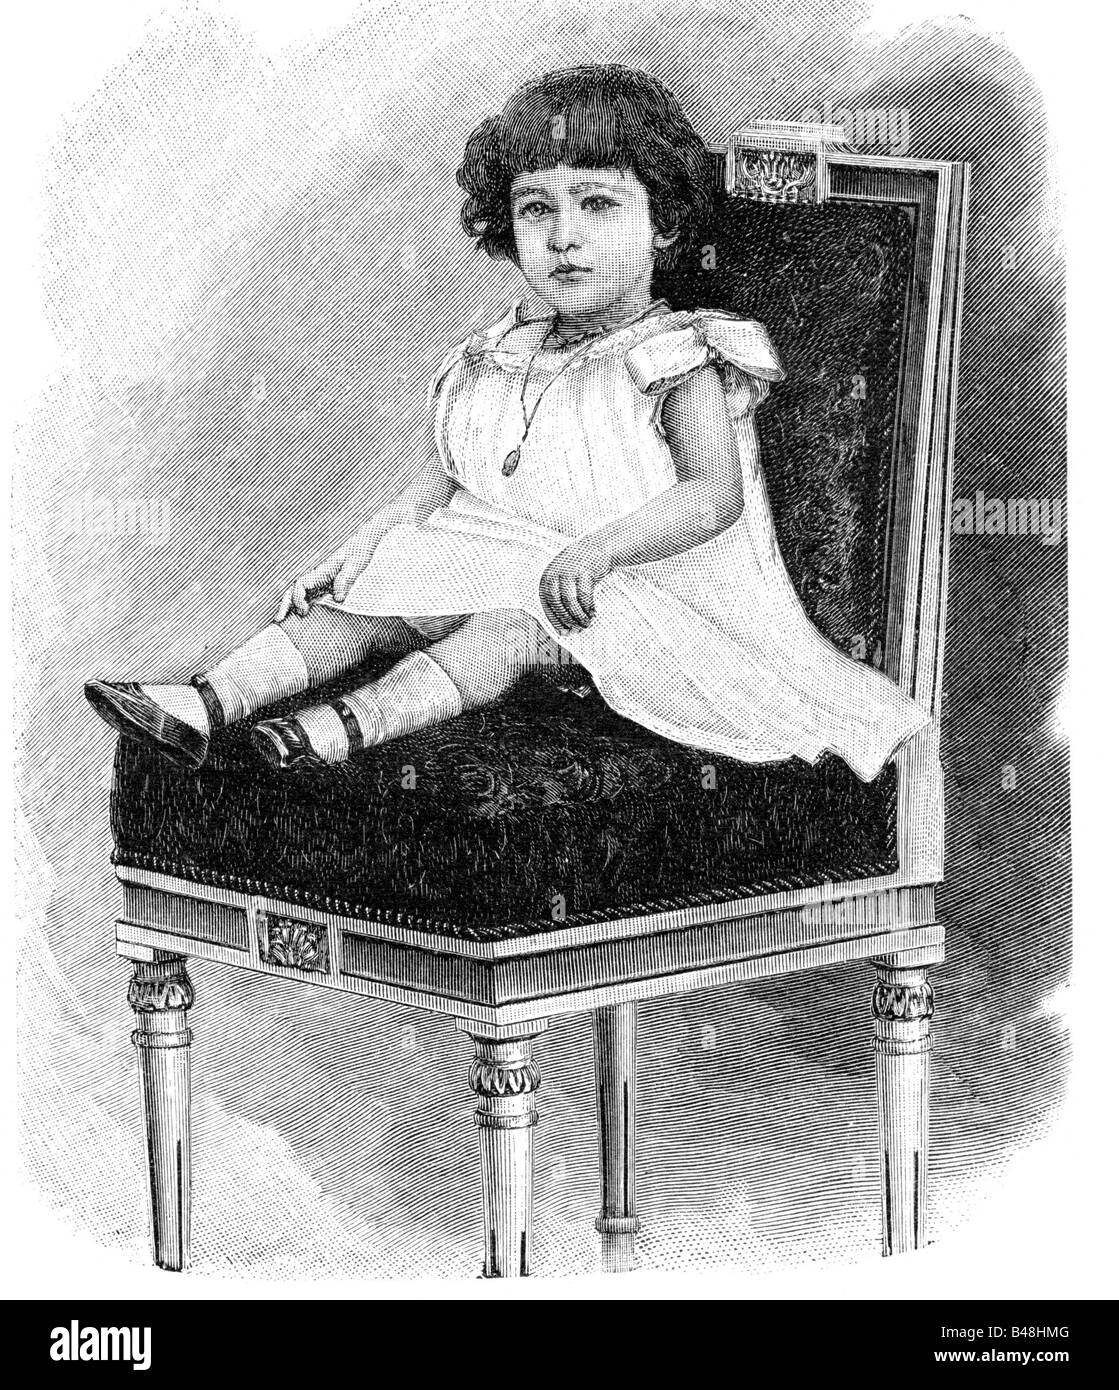 Boris III, 30.1.1894 - 28.8.1943, King of Bulgaria 3.10.1918 - 28.8.1943, as child, wood engraving, circa 1898, , Stock Photo